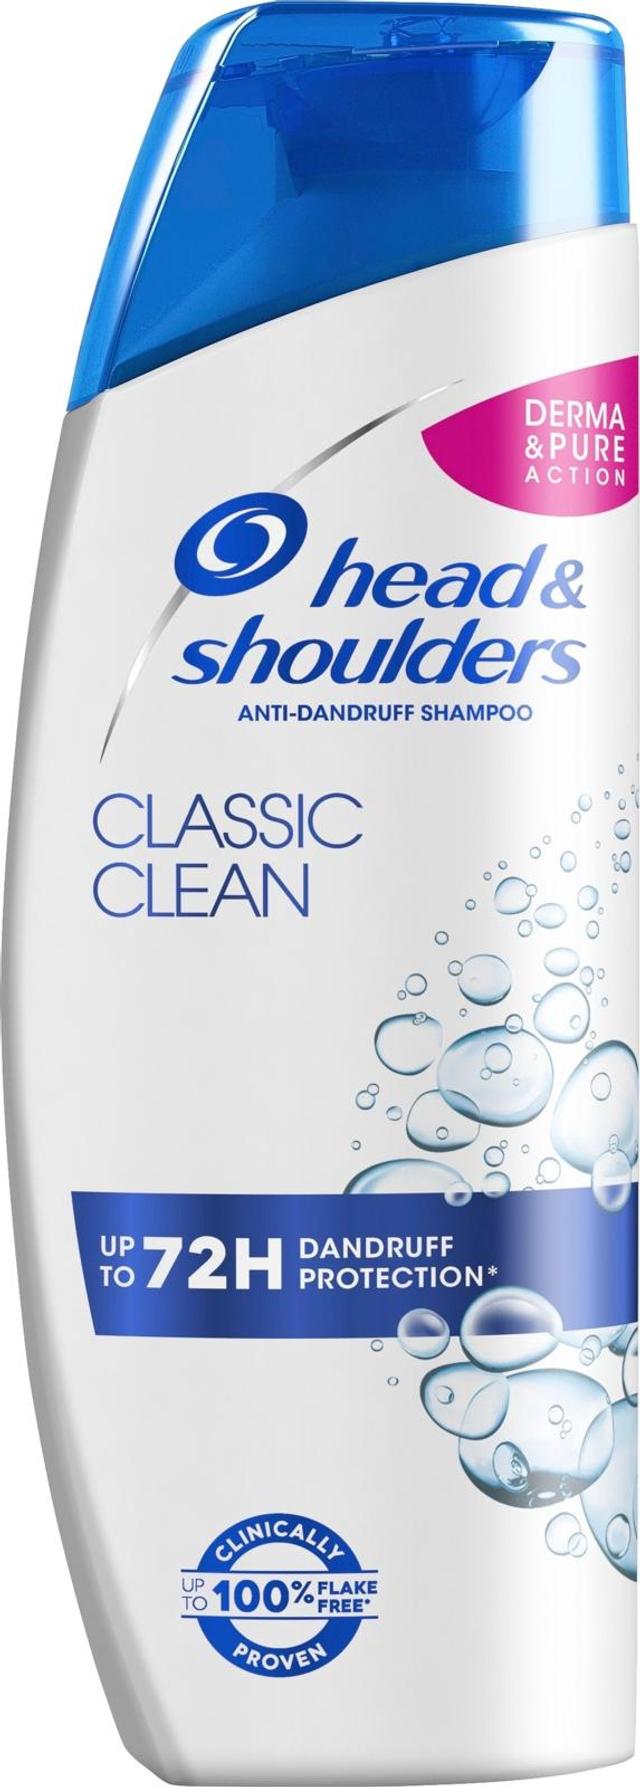 head&shoulders 250ml Classic Clean shampoo